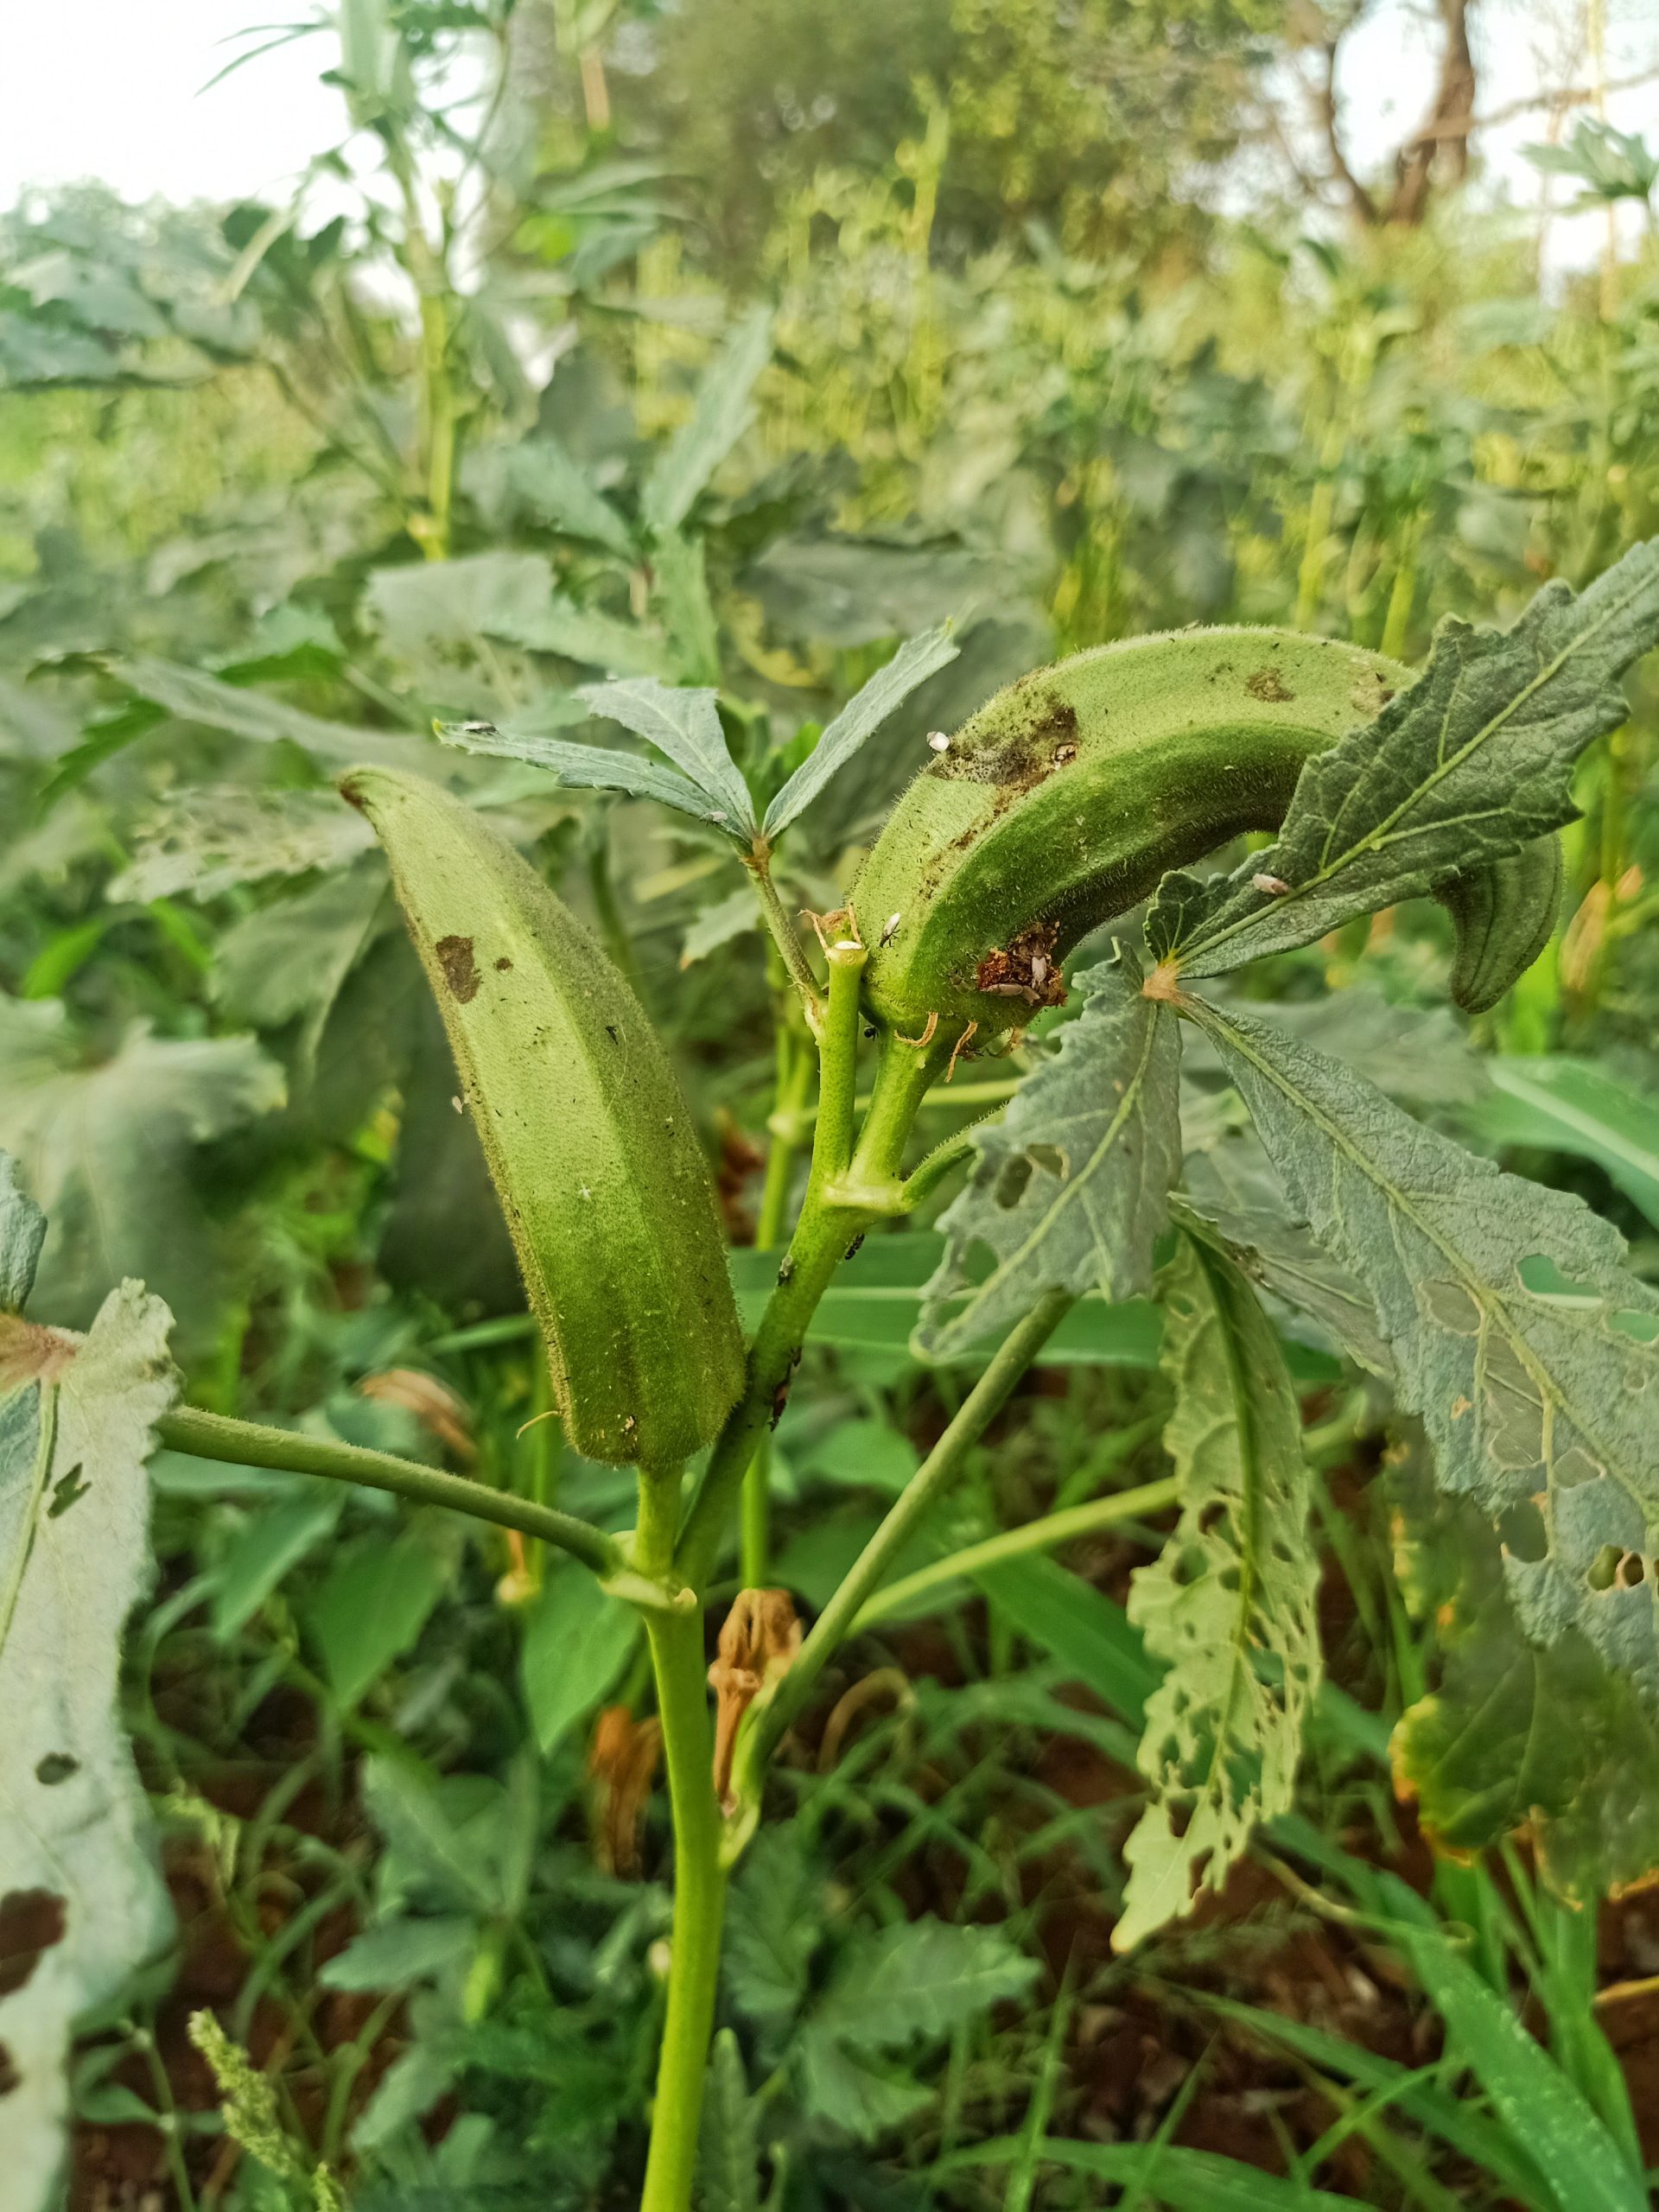 Ladyfingers on green plant